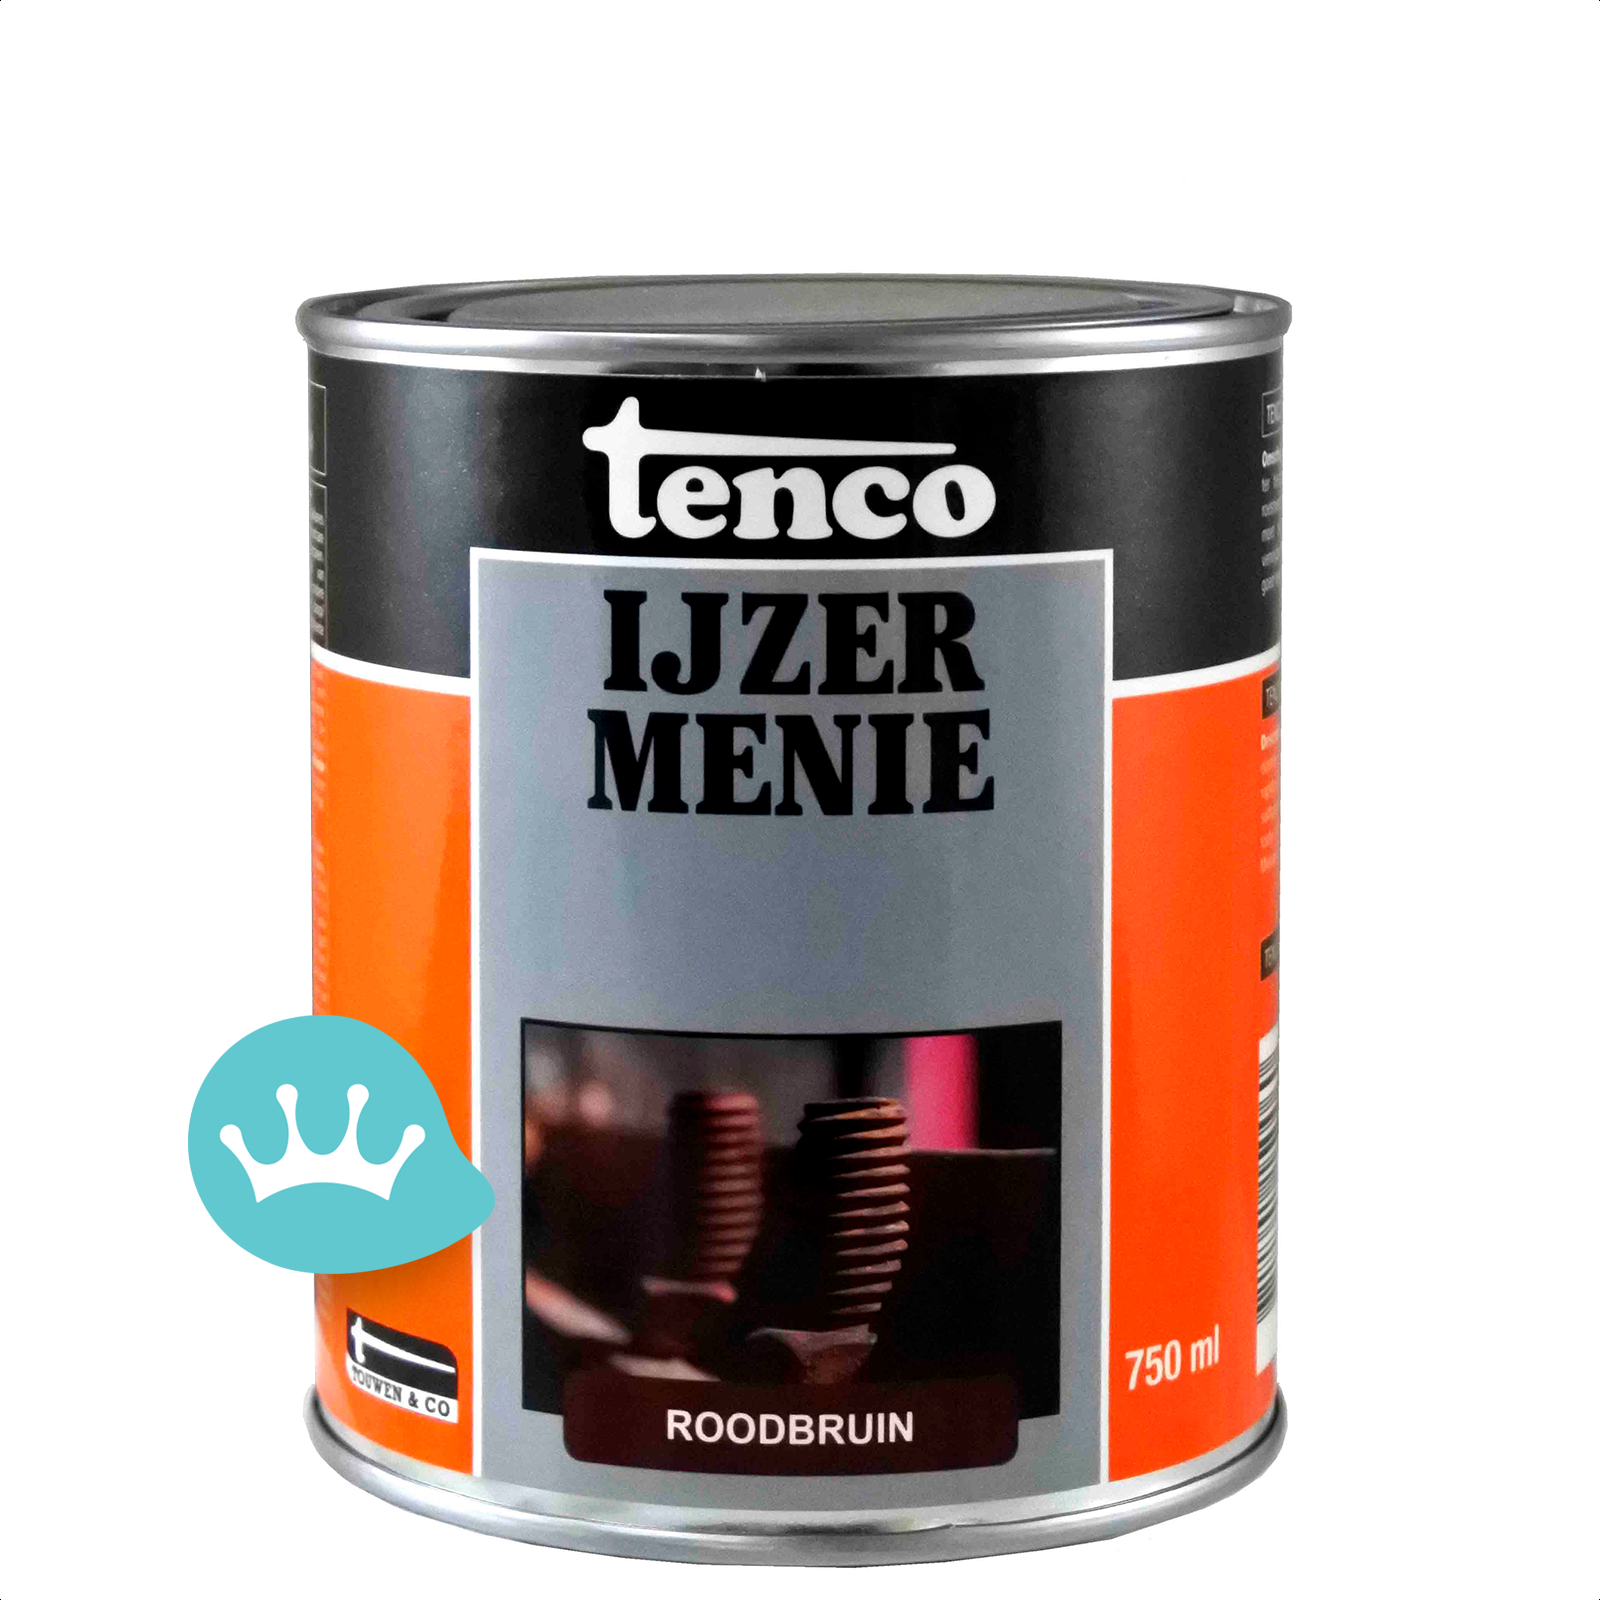 Tenco Verf.nl